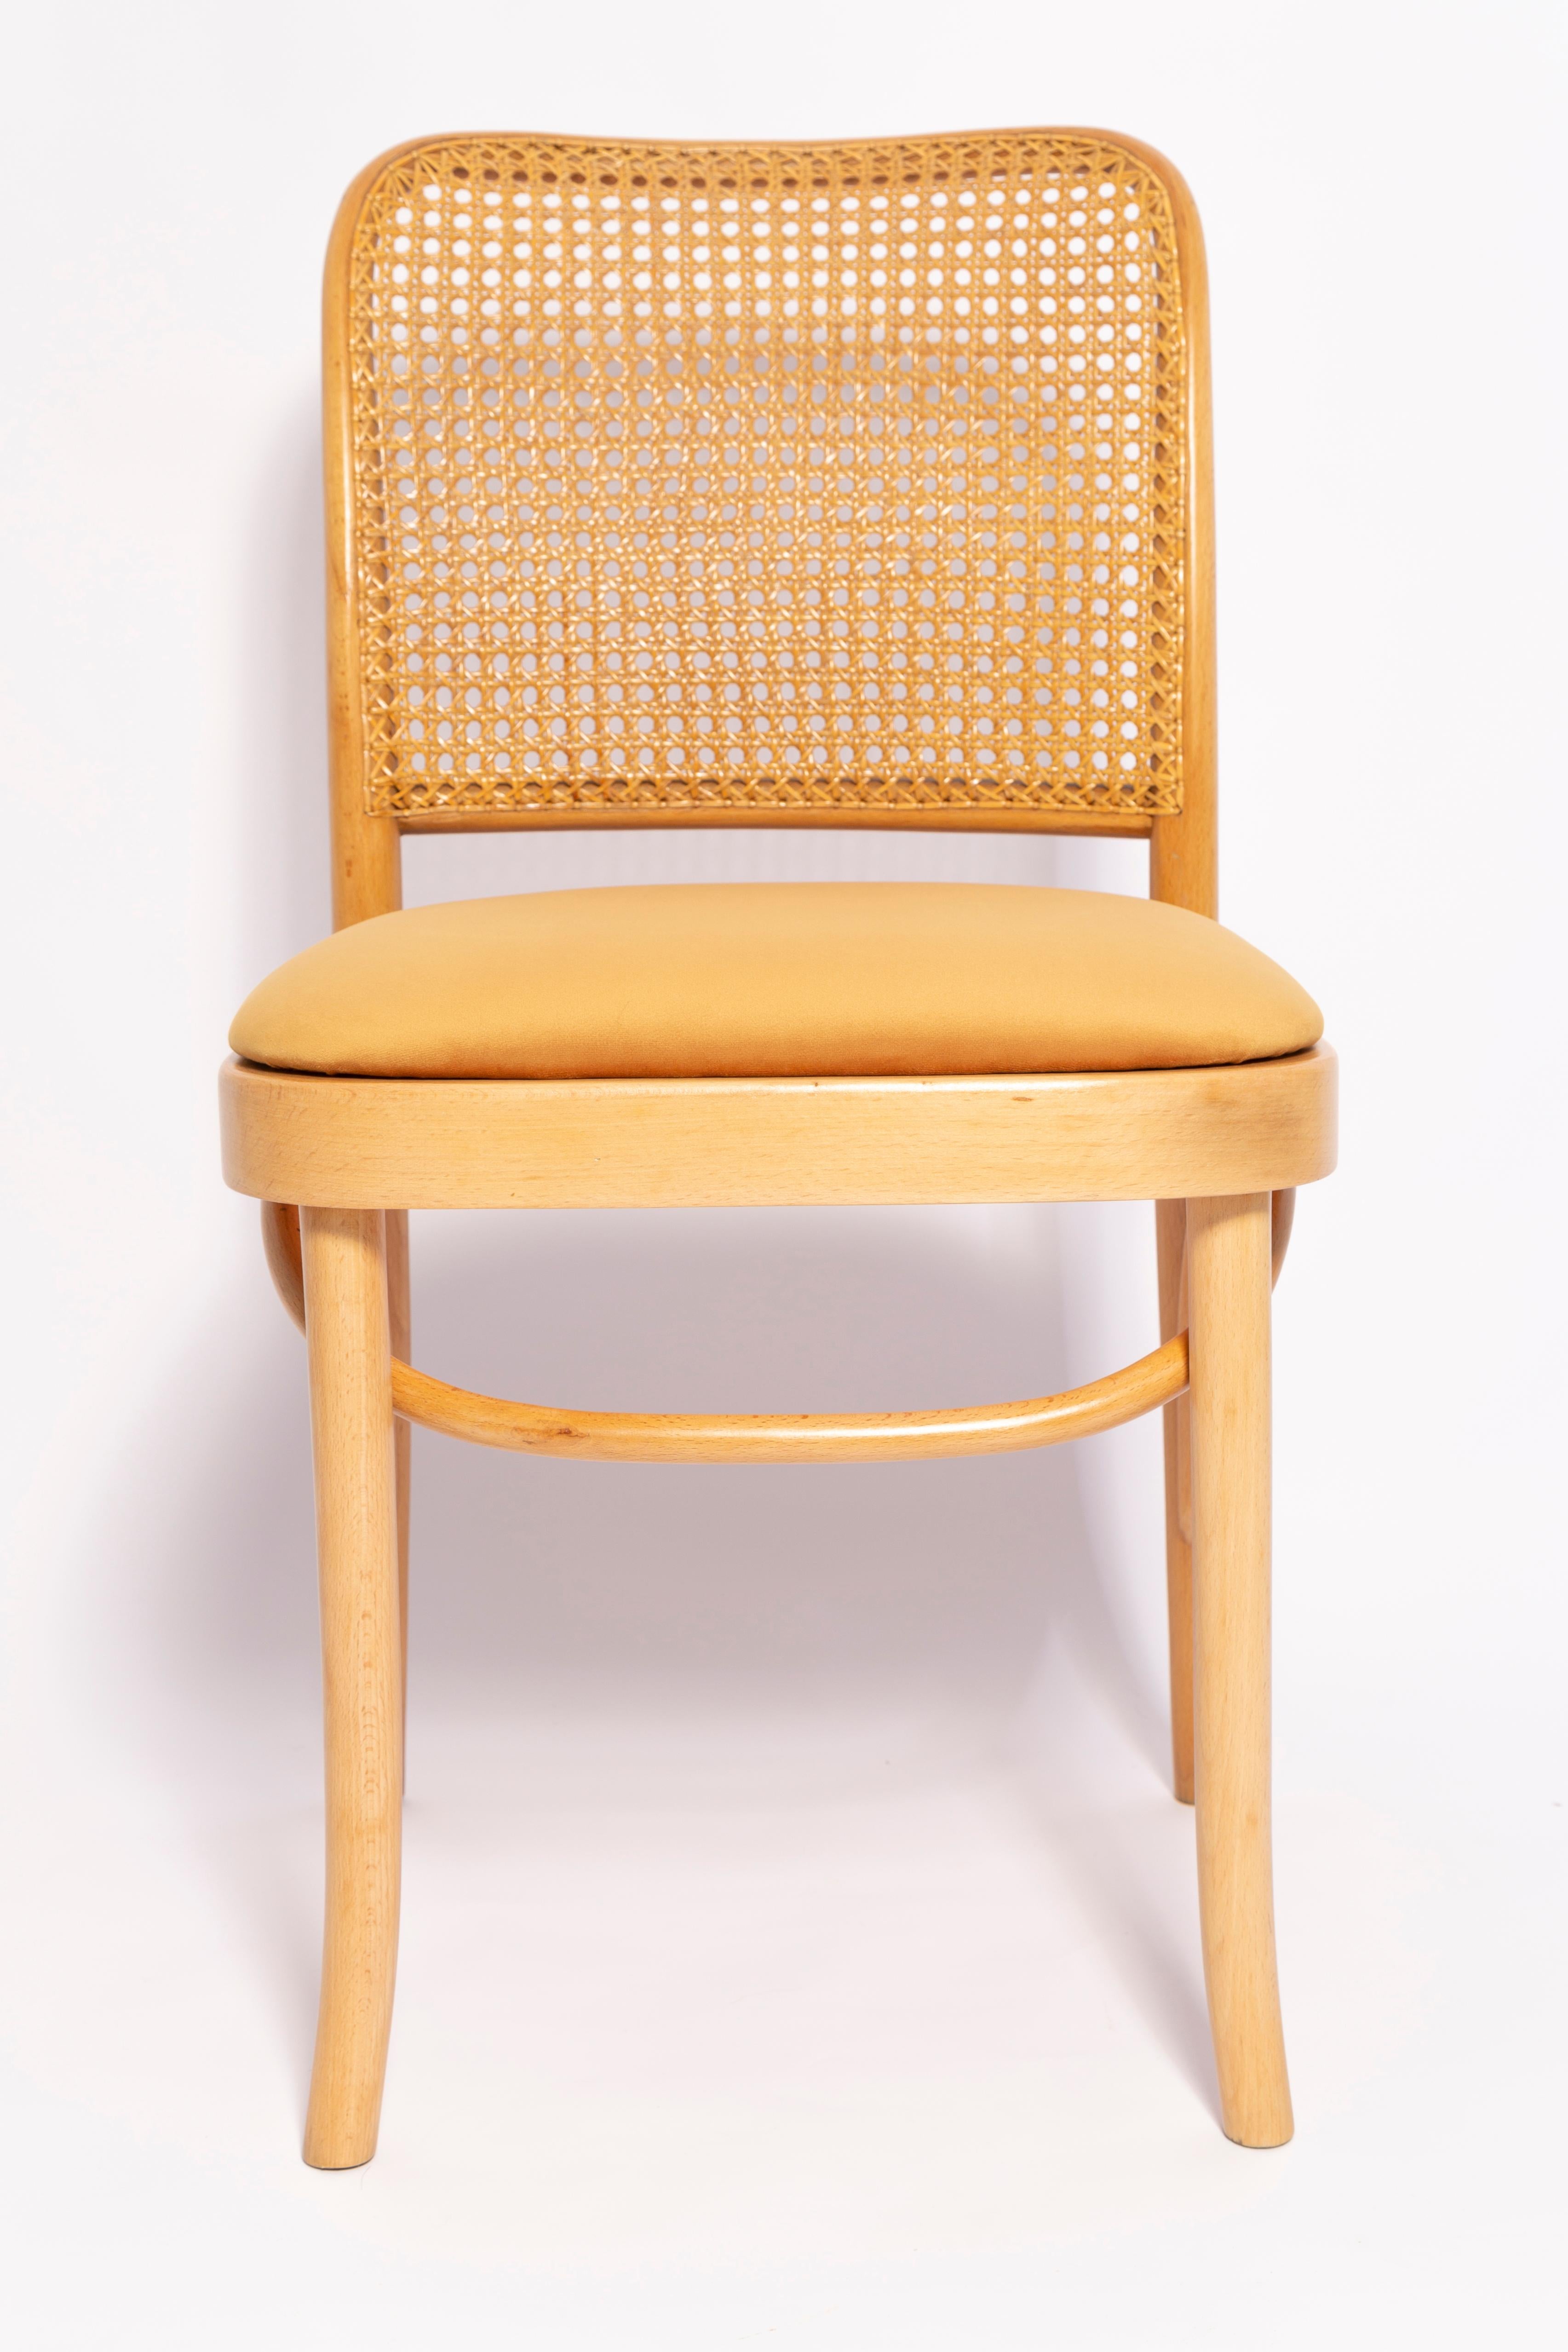 Mid-Century Yellow Velvet Thonet Wood Rattan Chair, Europe, 1960s For Sale 5